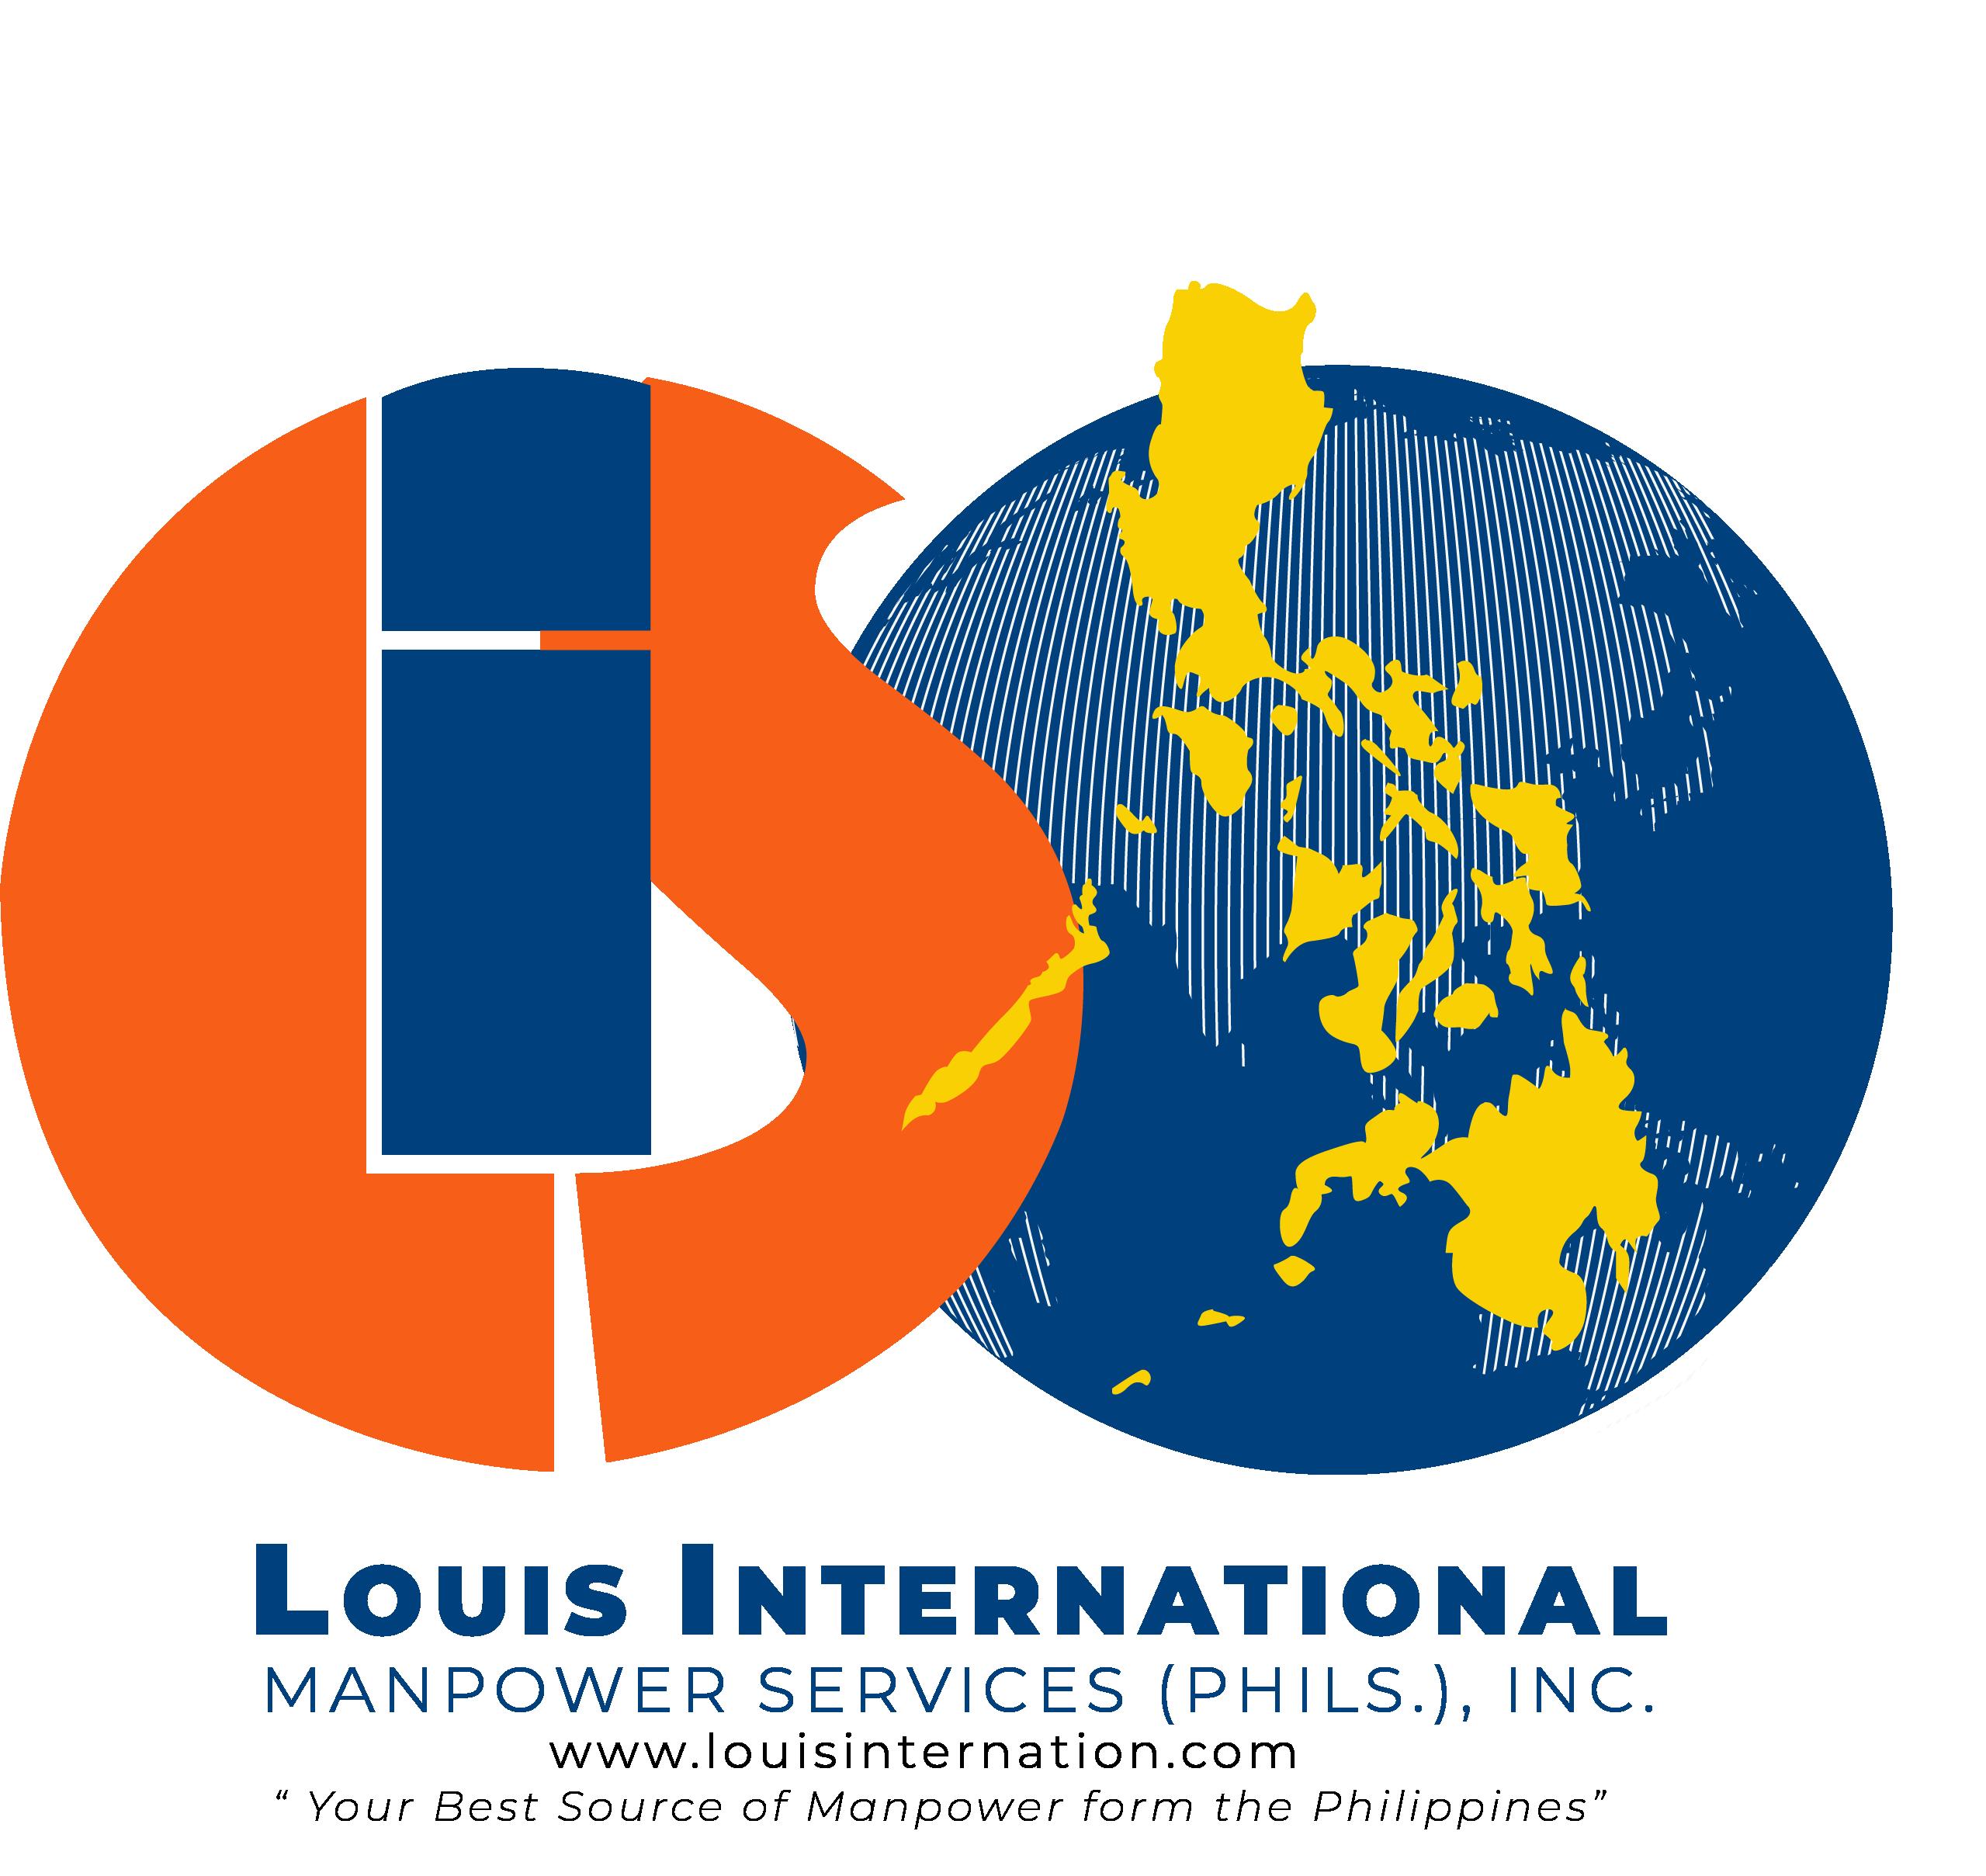 LOUIS INTERNATIONAL MANPOWER SERVICES